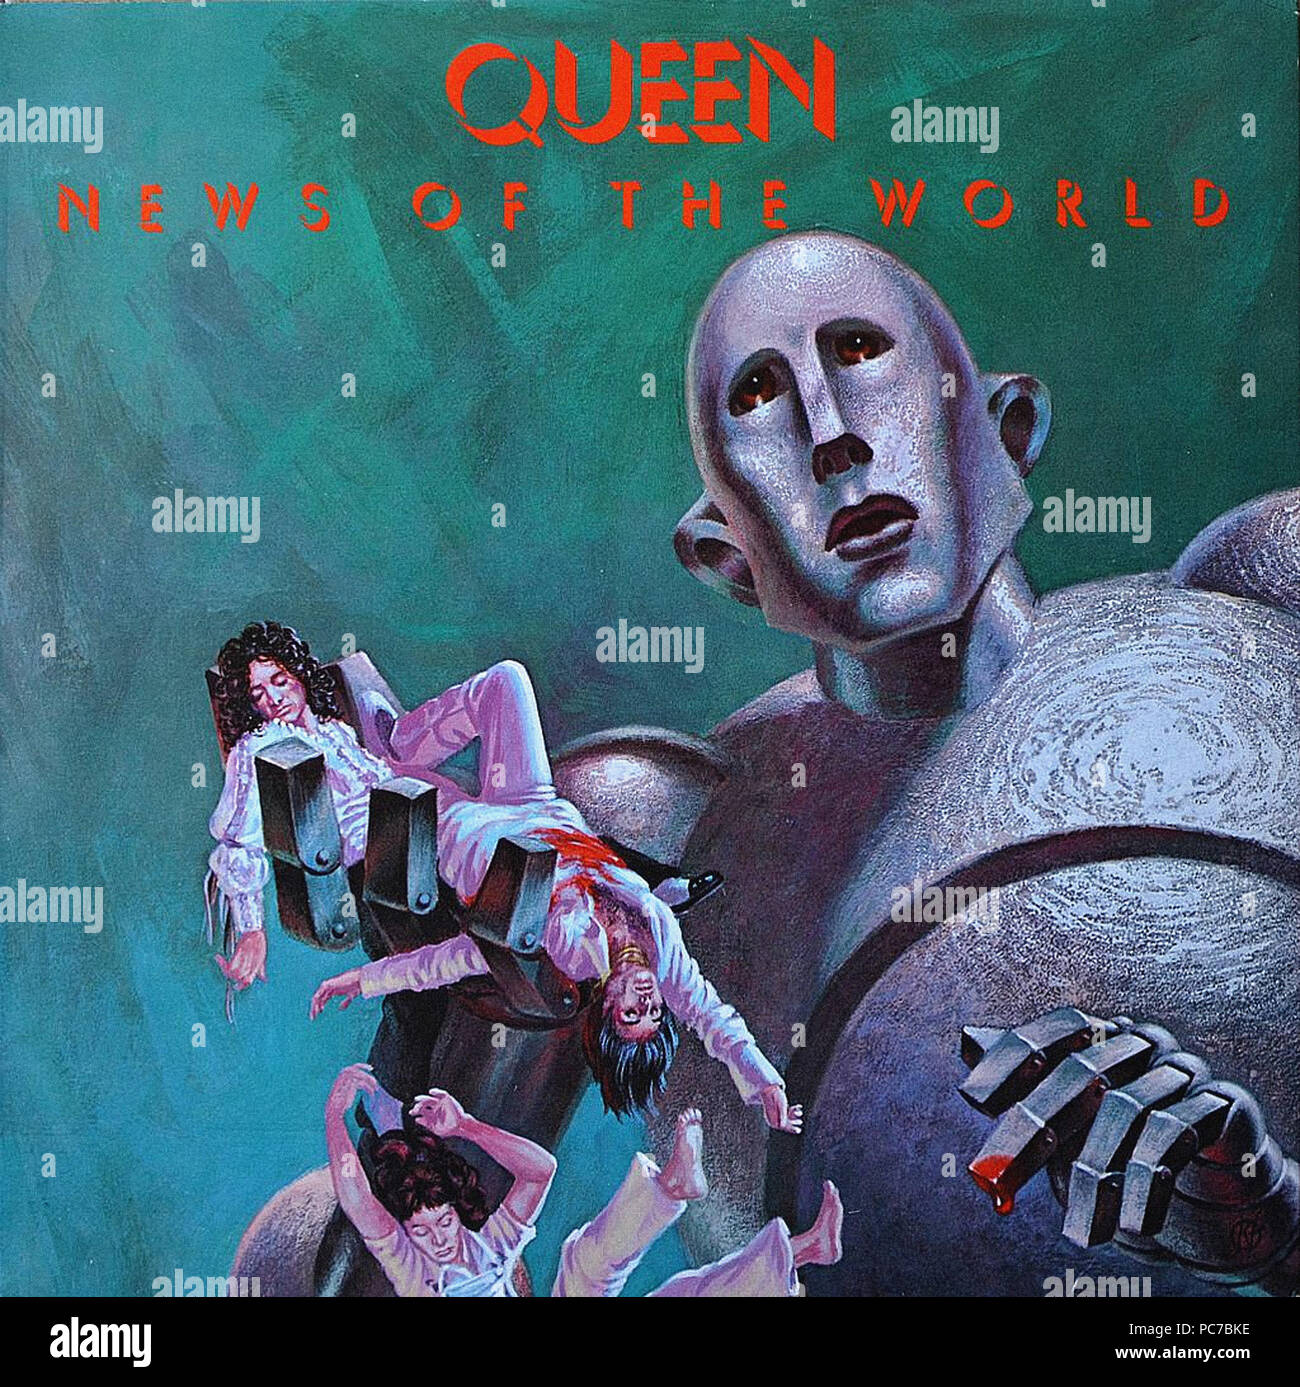 Queen - News Of The World - Vintage vinyl album cover Stock Photo - Alamy